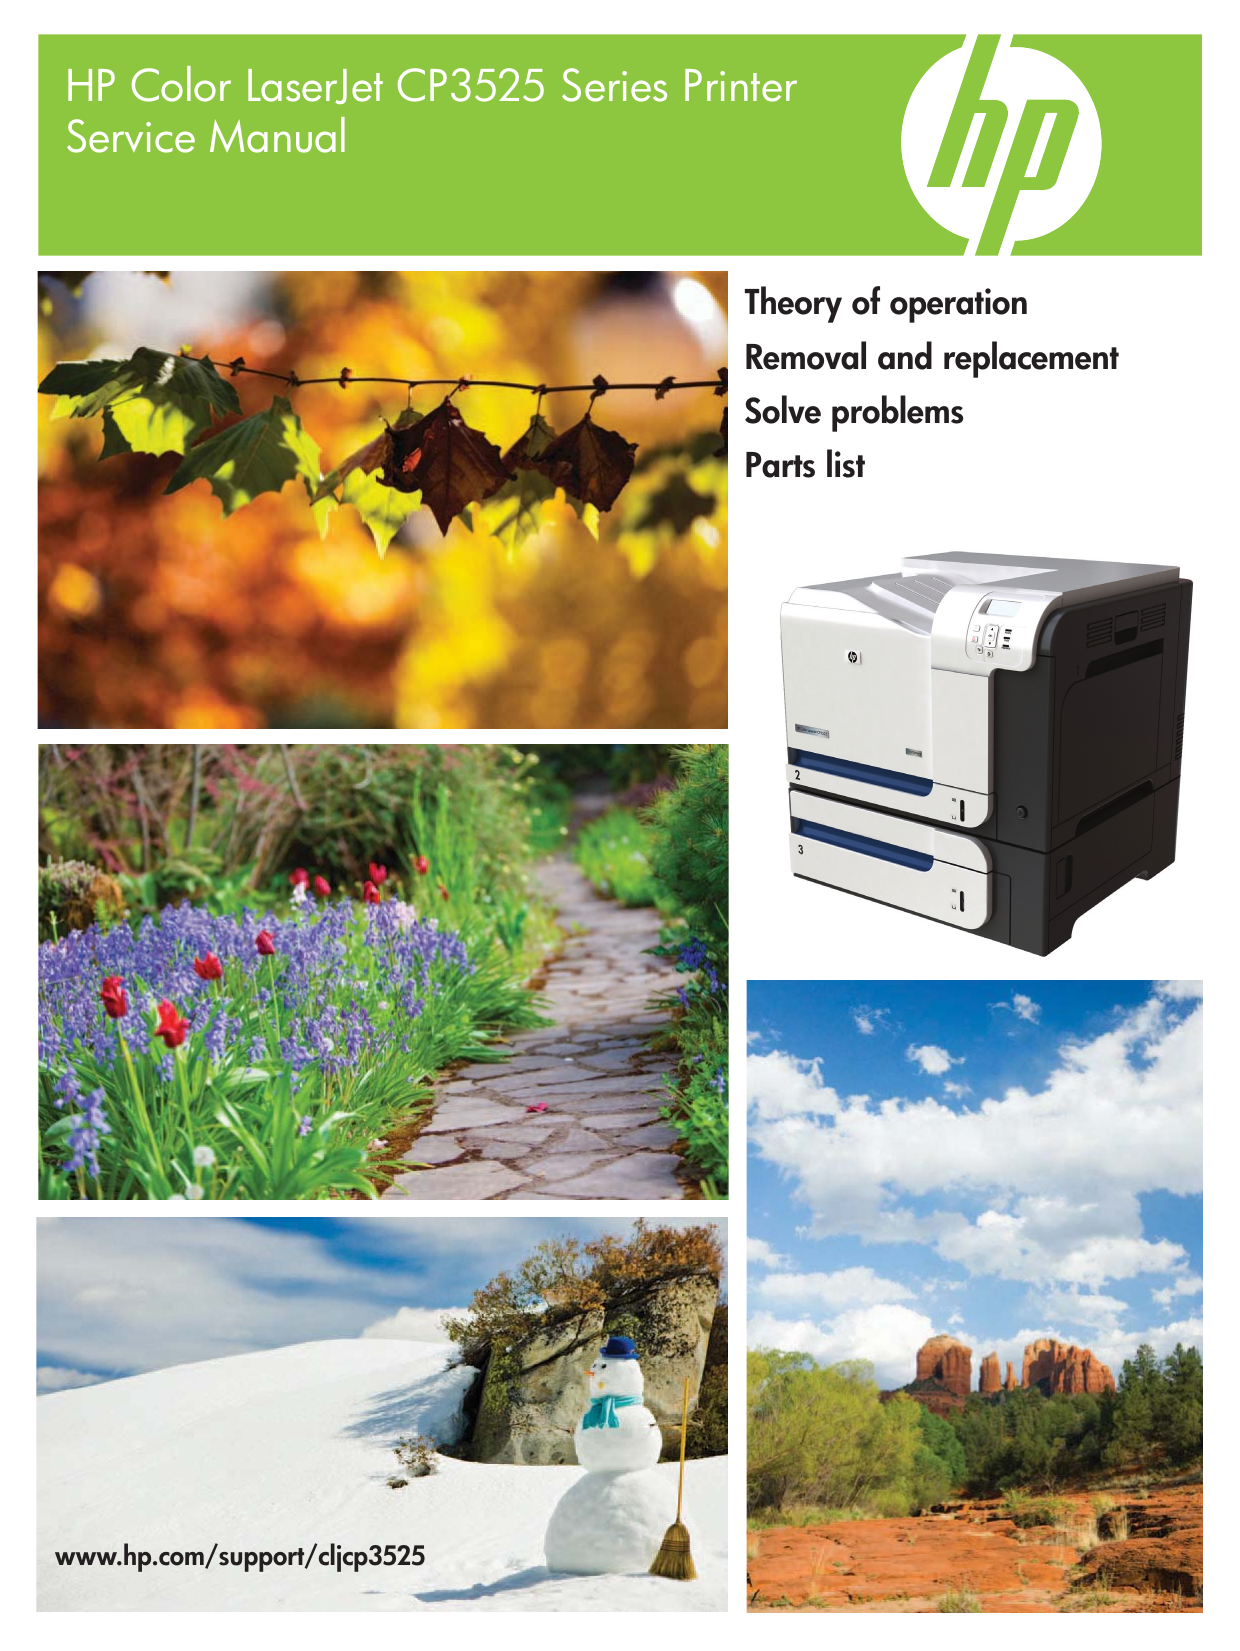 HP Color LaserJet CP3525 color laser printer service manual Preview image 1